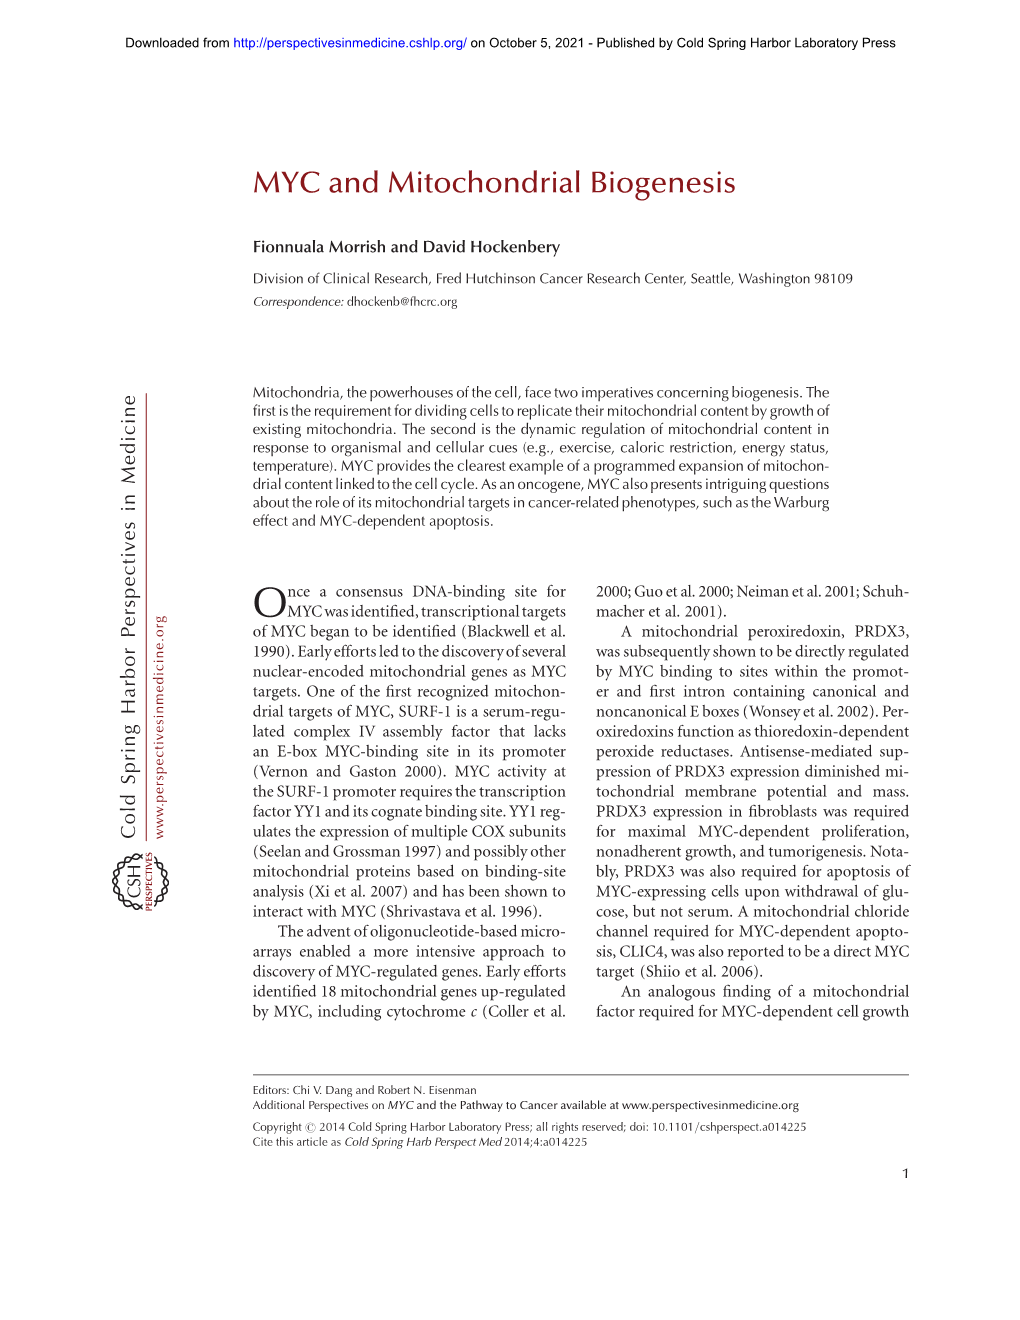 MYC and Mitochondrial Biogenesis